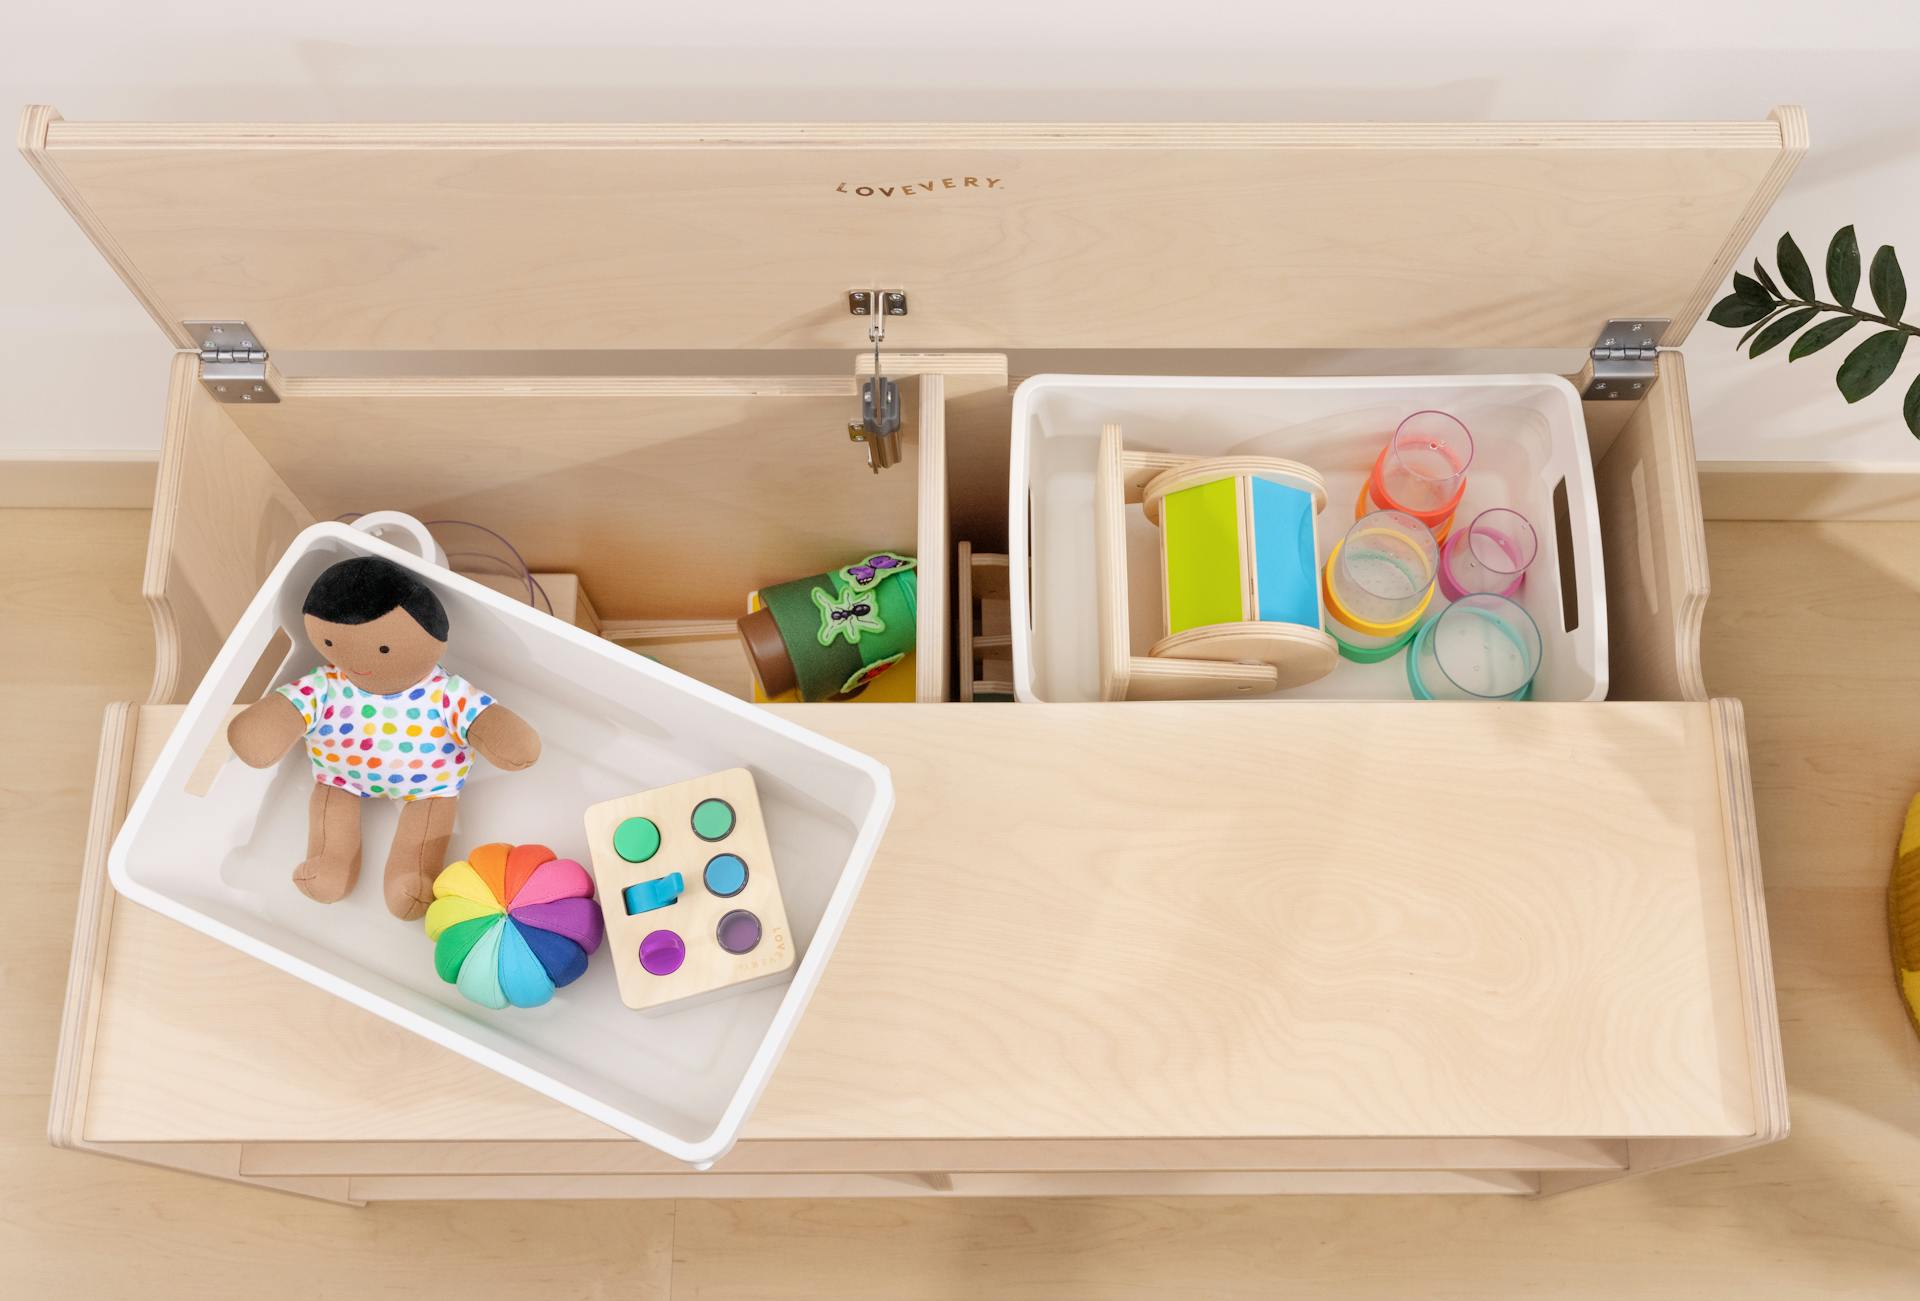 Inside the The Montessori Playshelf by Lovevery